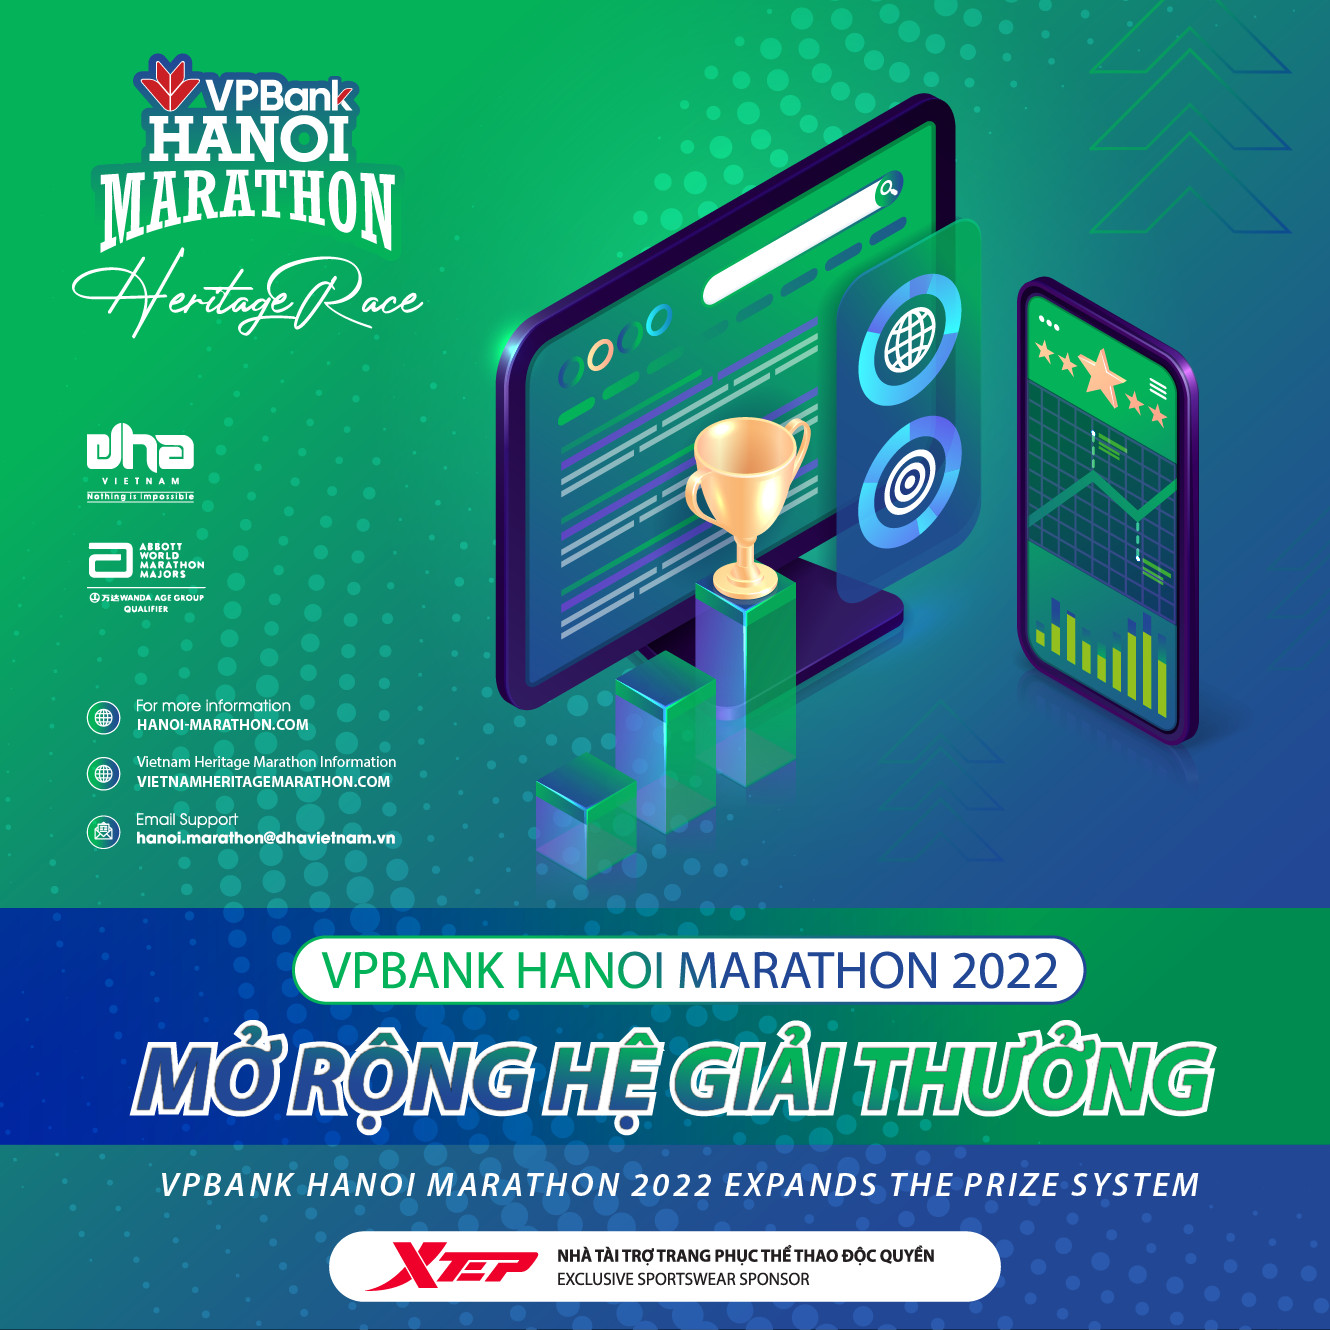 VPBank Hanoi Marathon 2022 Expands The Prize System